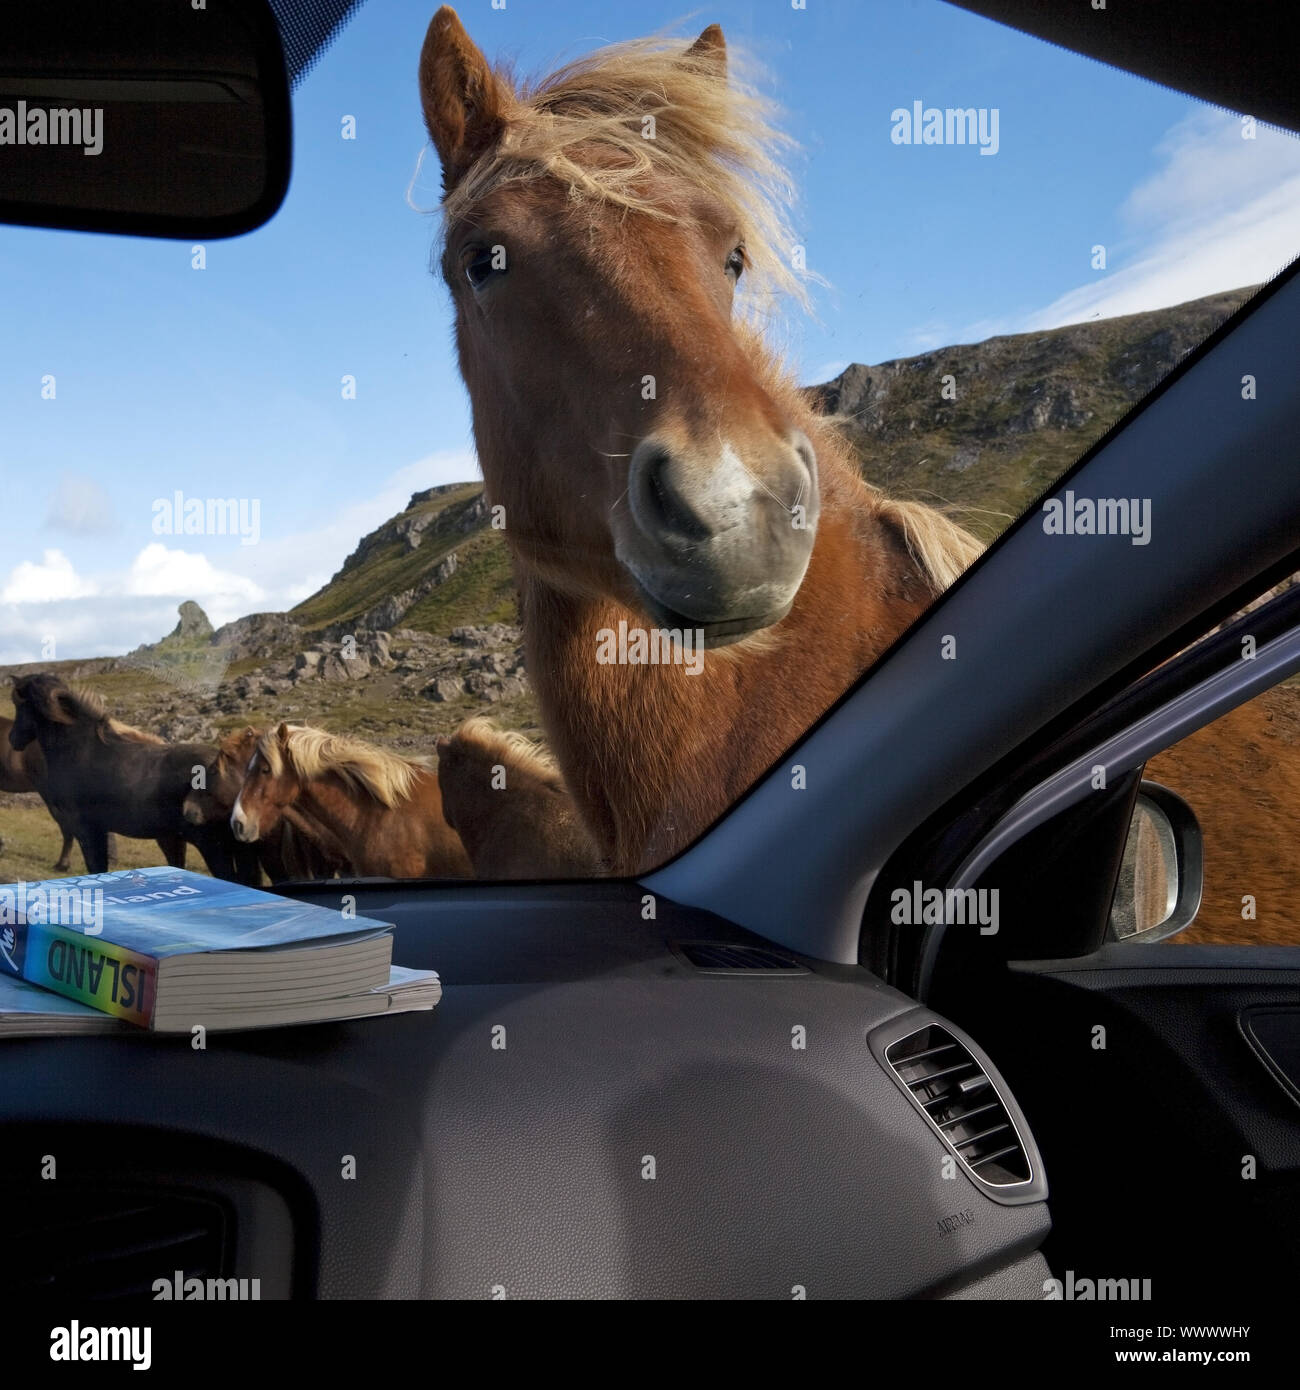 Cavallo islandese (Equus przewalskii f. caballus) curiosamente cercando in un auto, Vatnsnes, Islanda Foto Stock